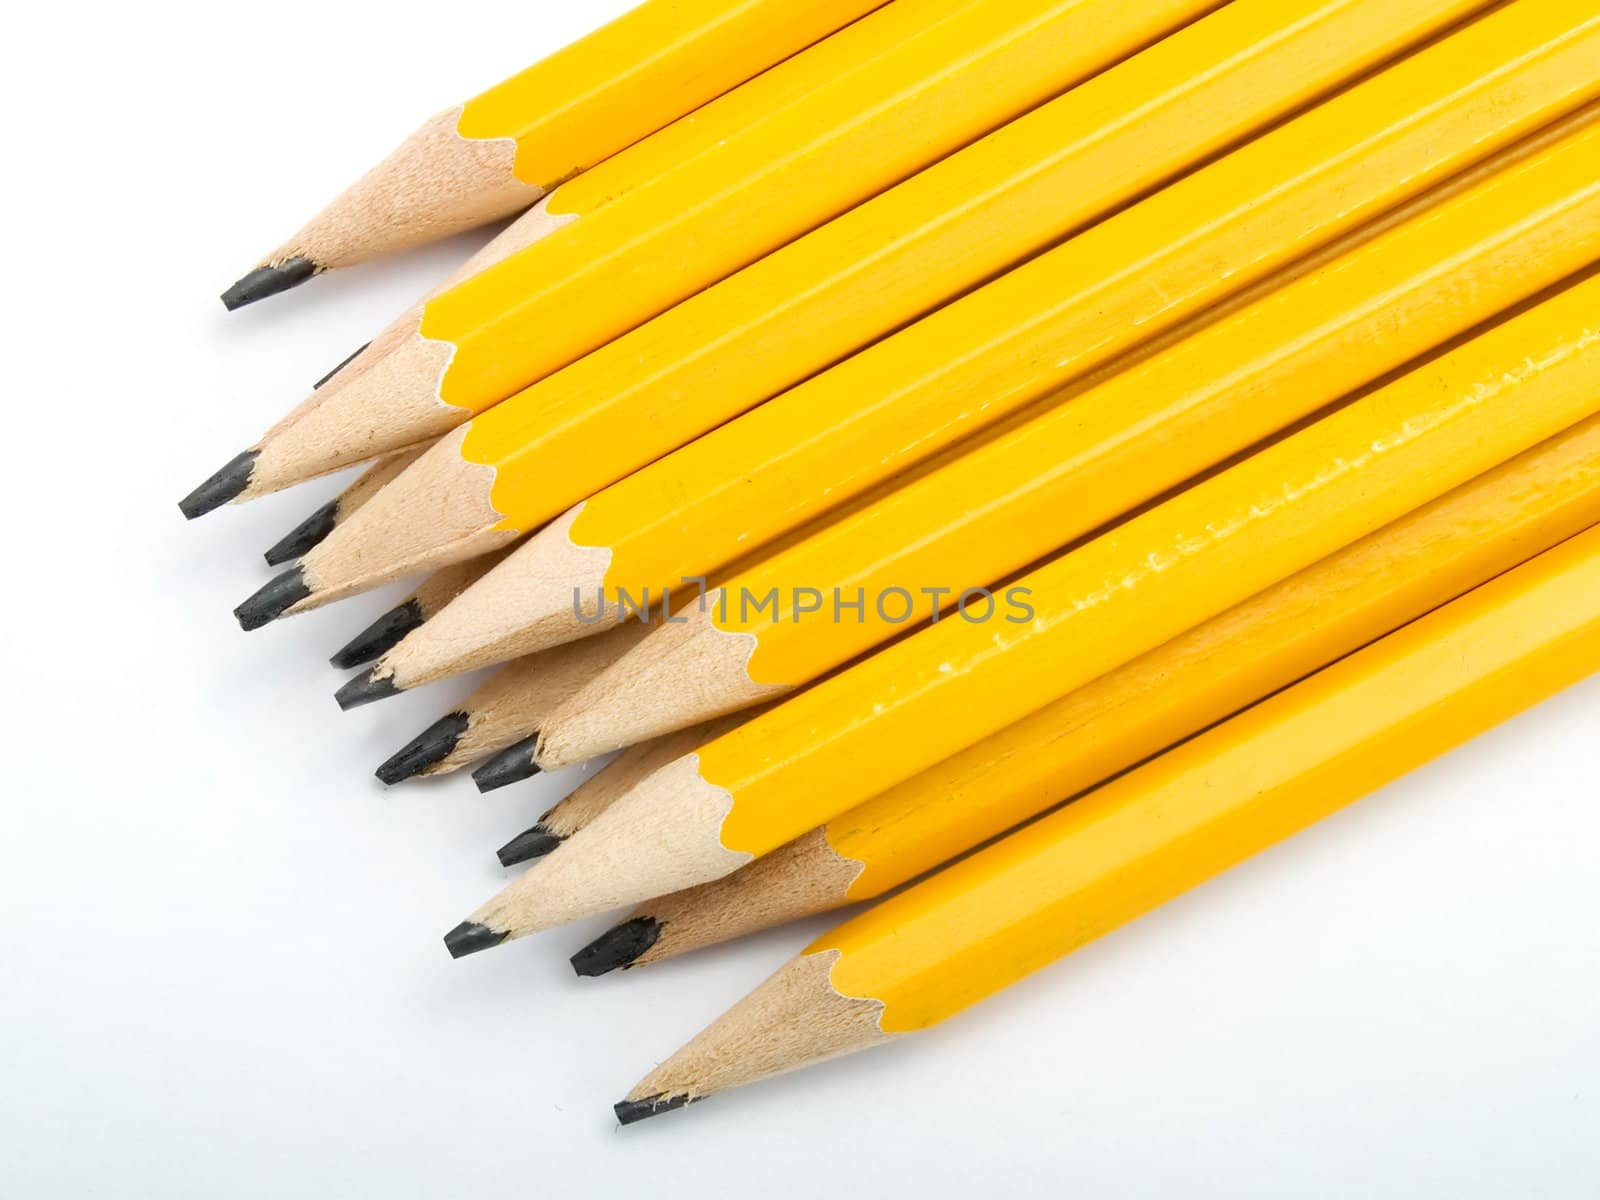 Pencils by henrischmit